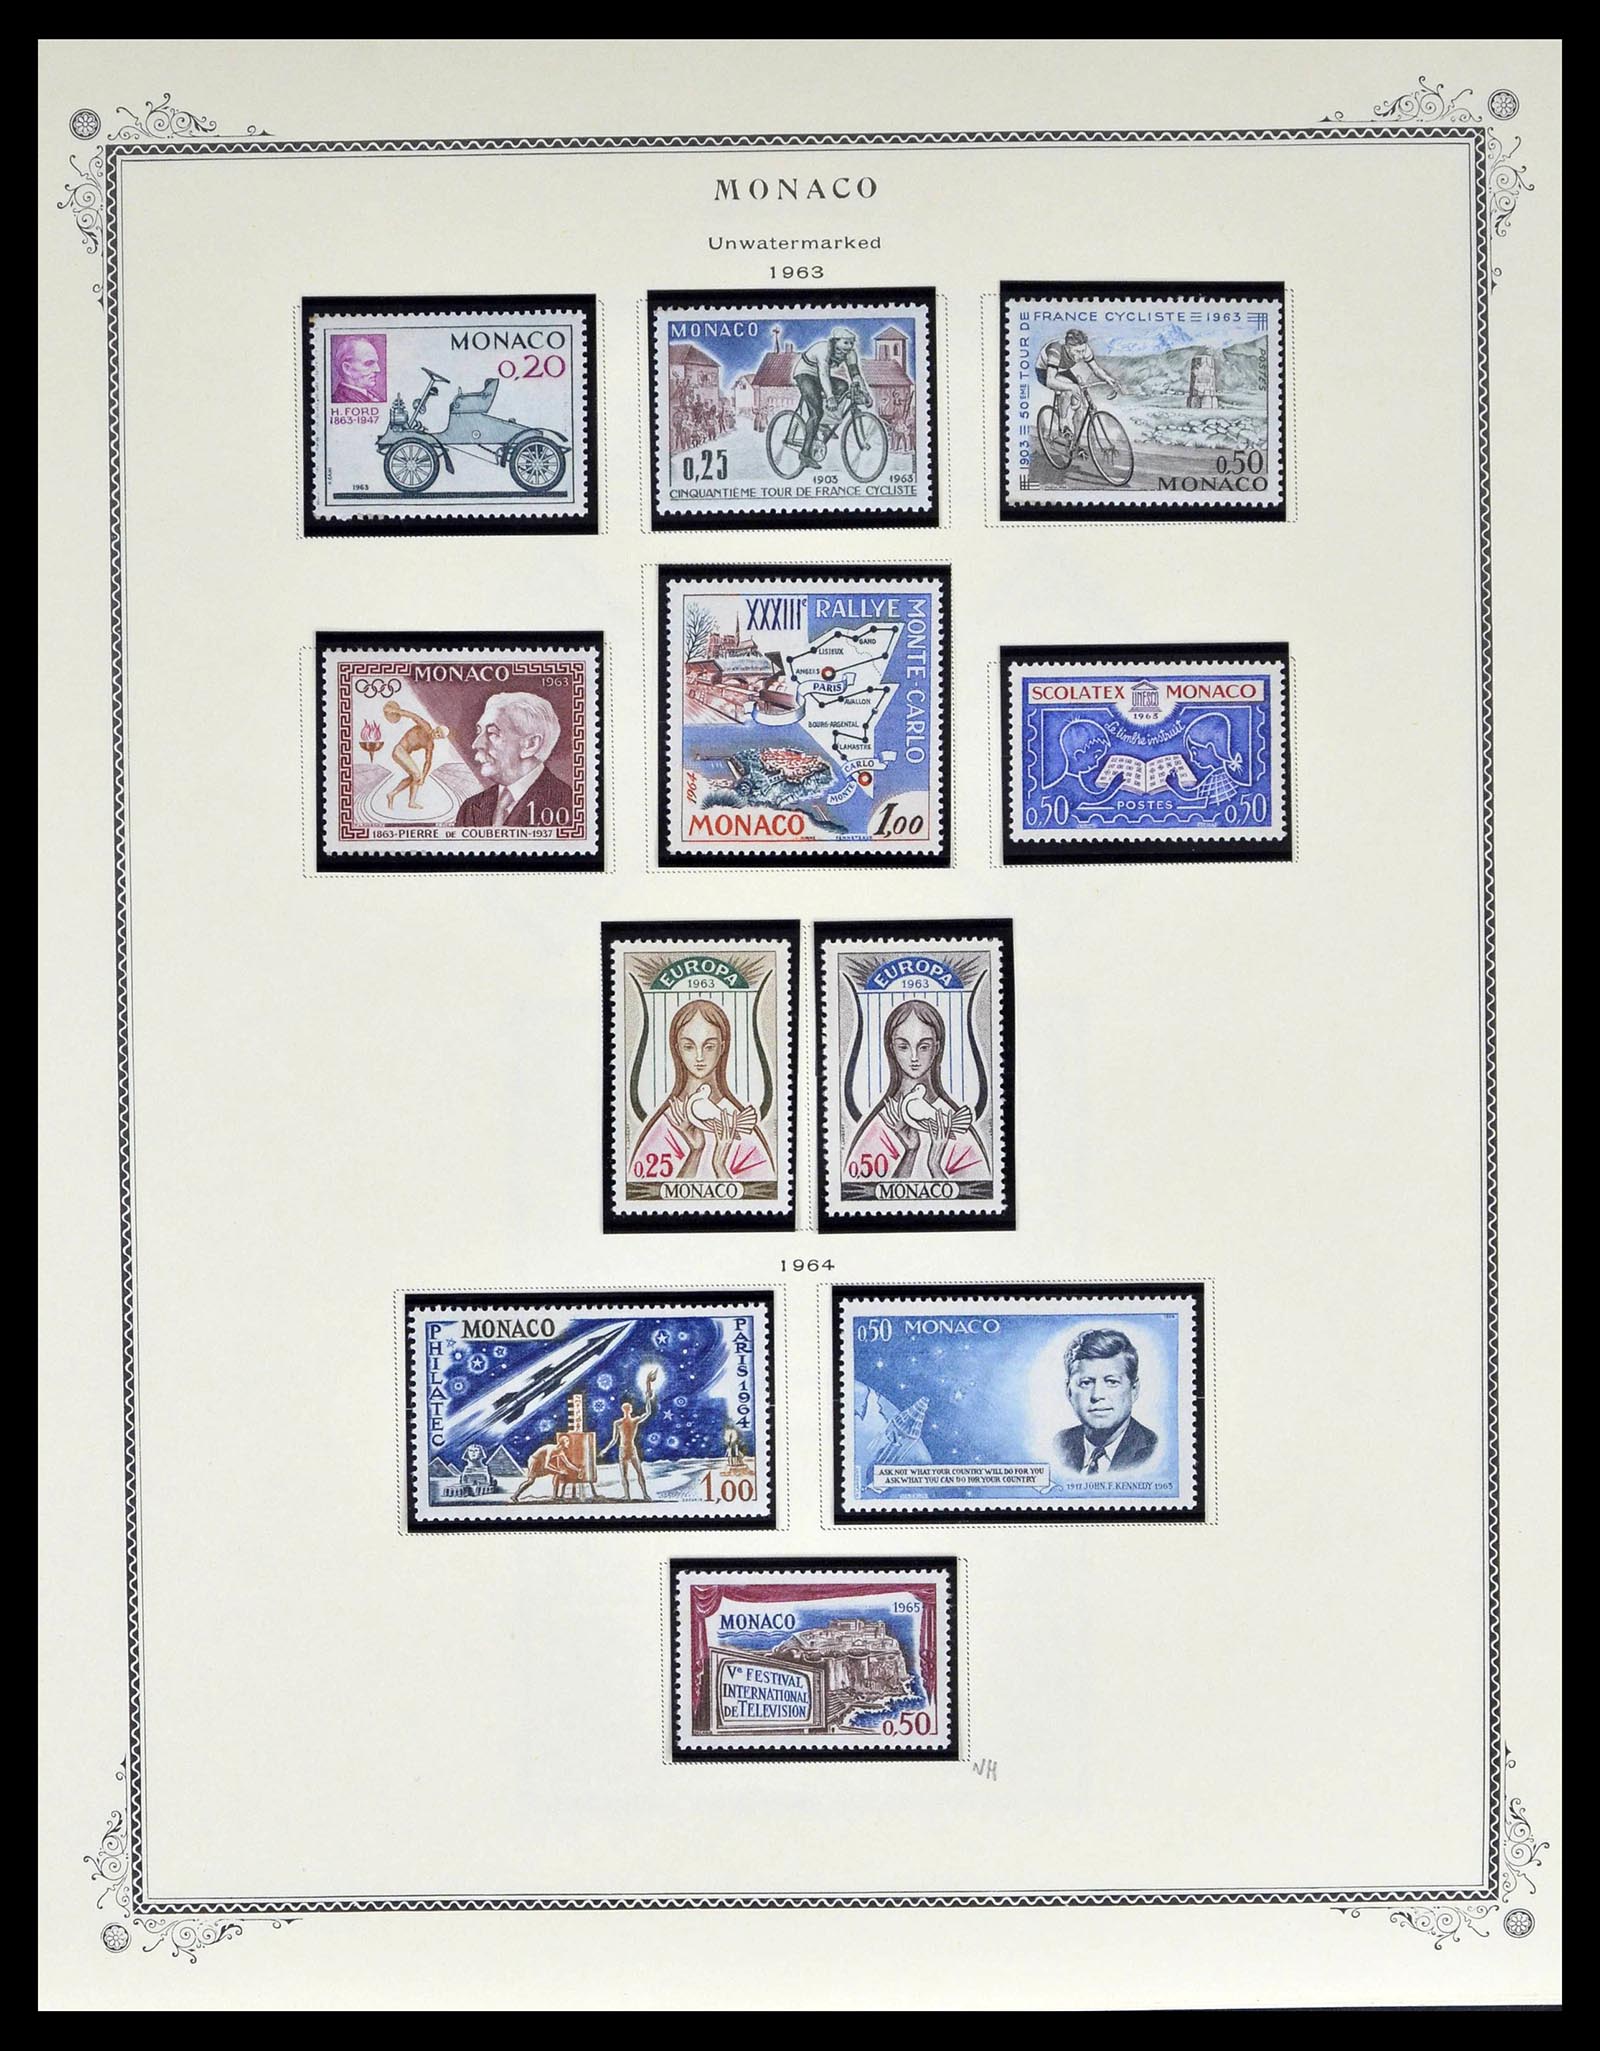 39181 0060 - Stamp collection 39181 Monaco 1885-1980.